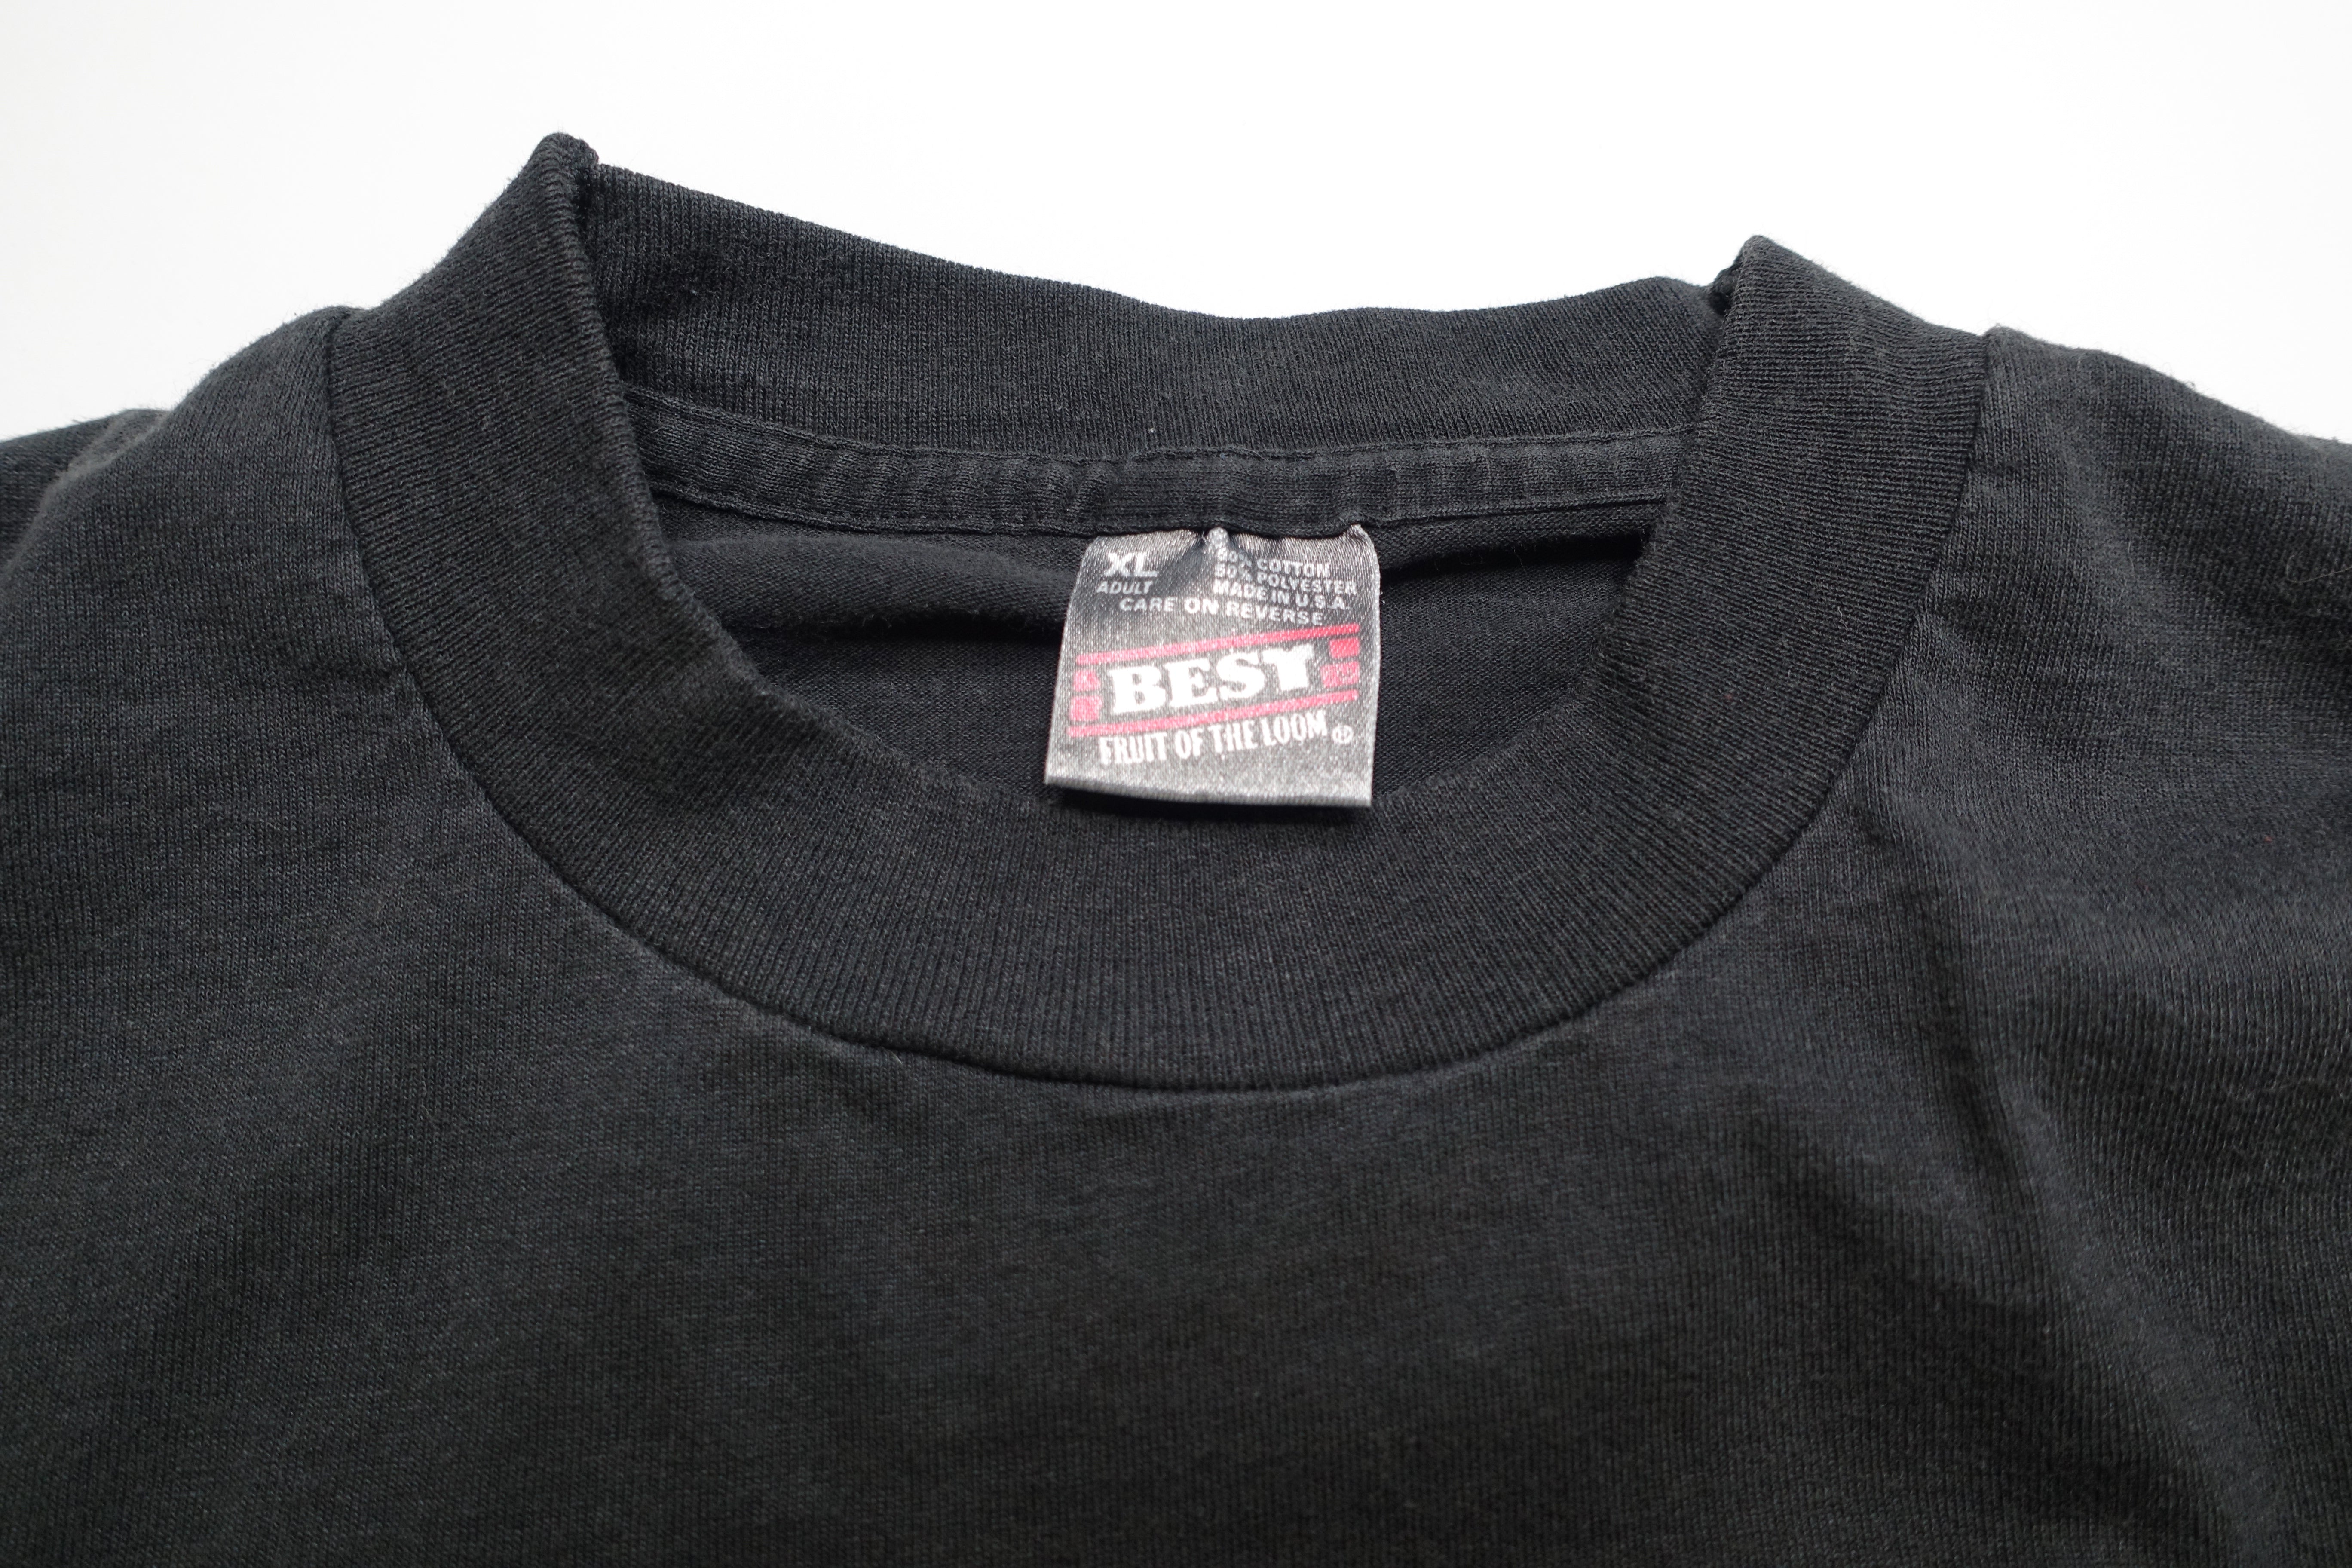 UFOFU - UFOFU Long Sleeve 1996 Tour Shirt Size XL